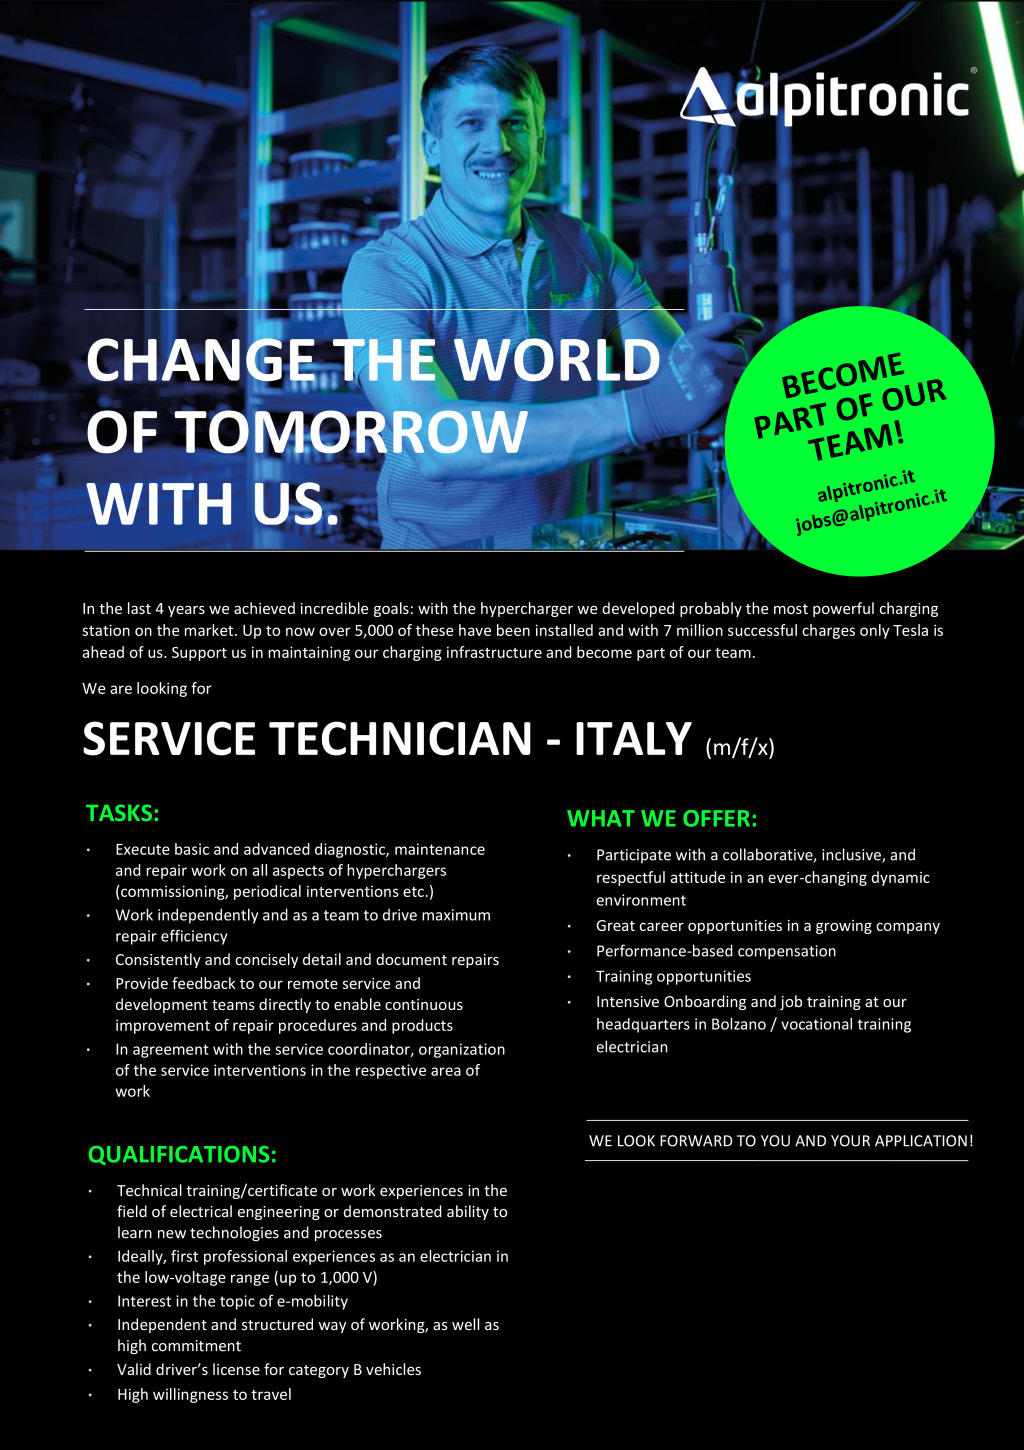 Service Technician - Italy (m/f/x)